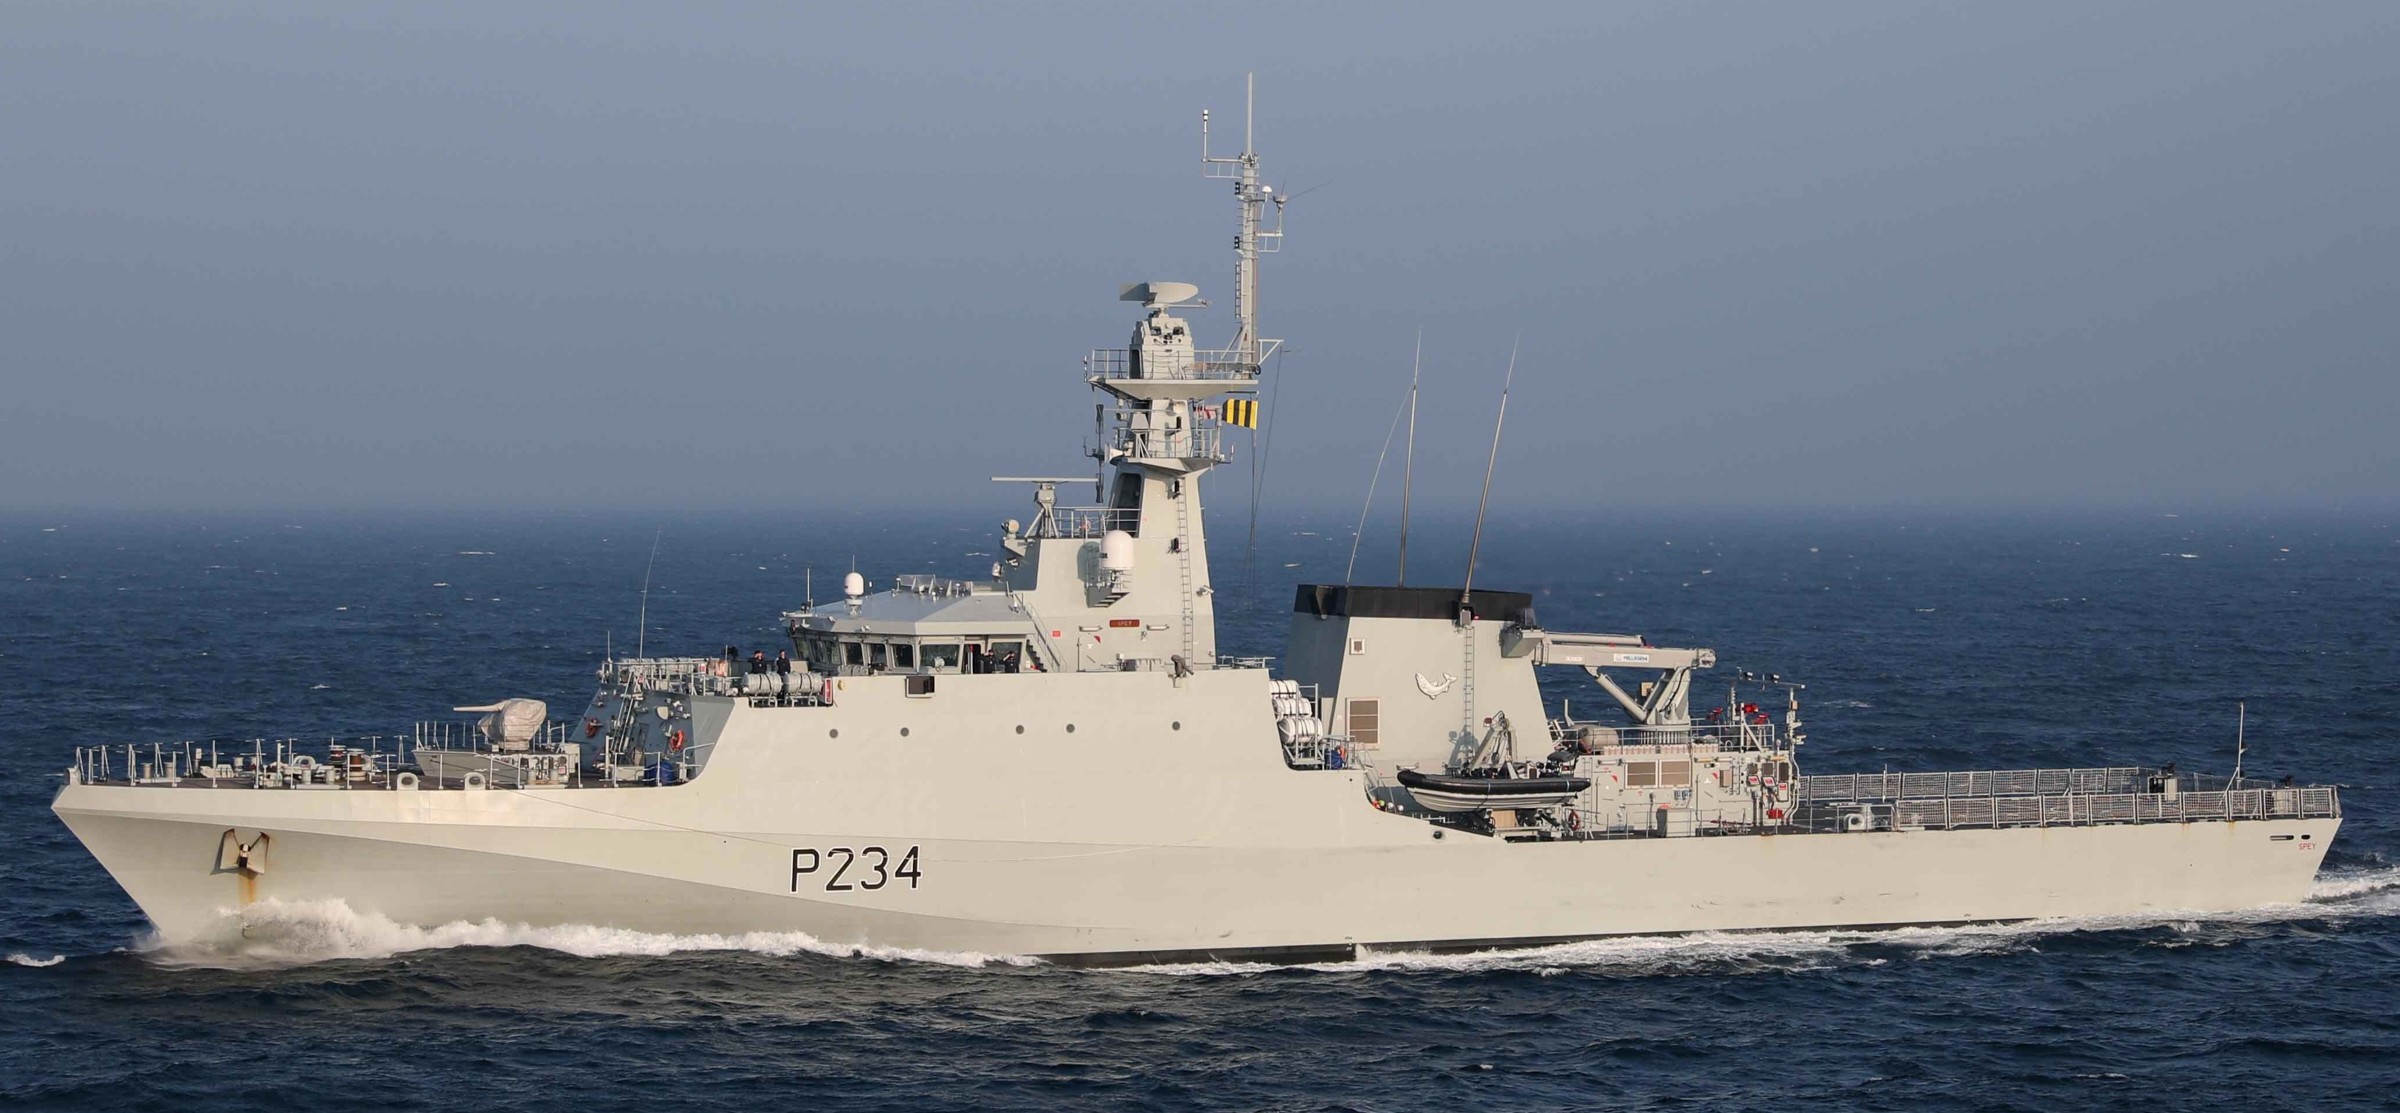 p-234 hms spey river class offshore patrol vessel opv royal navy 17